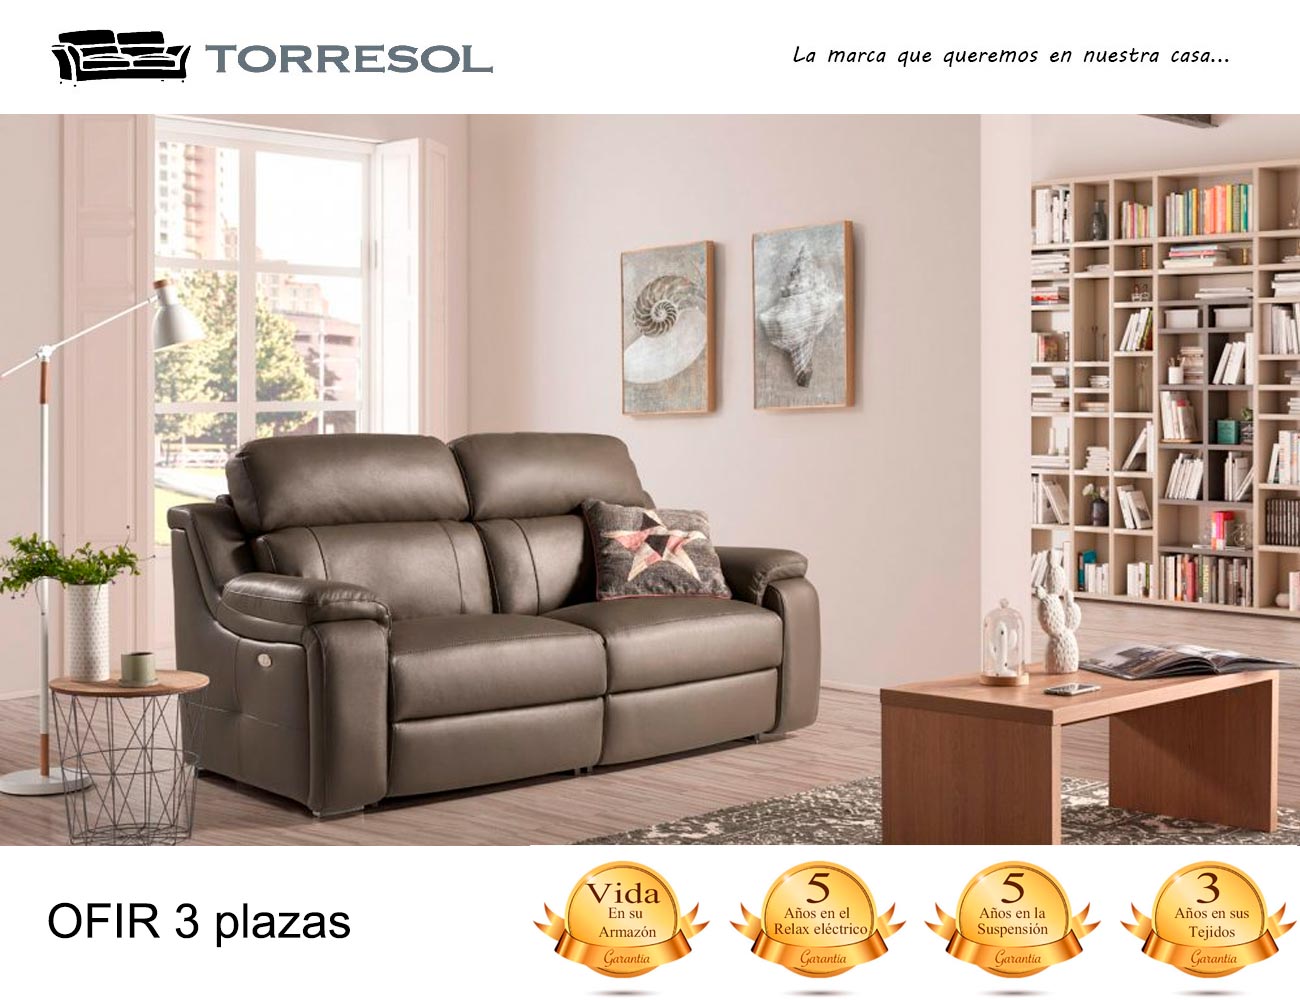 Sofa ofir torresol 3